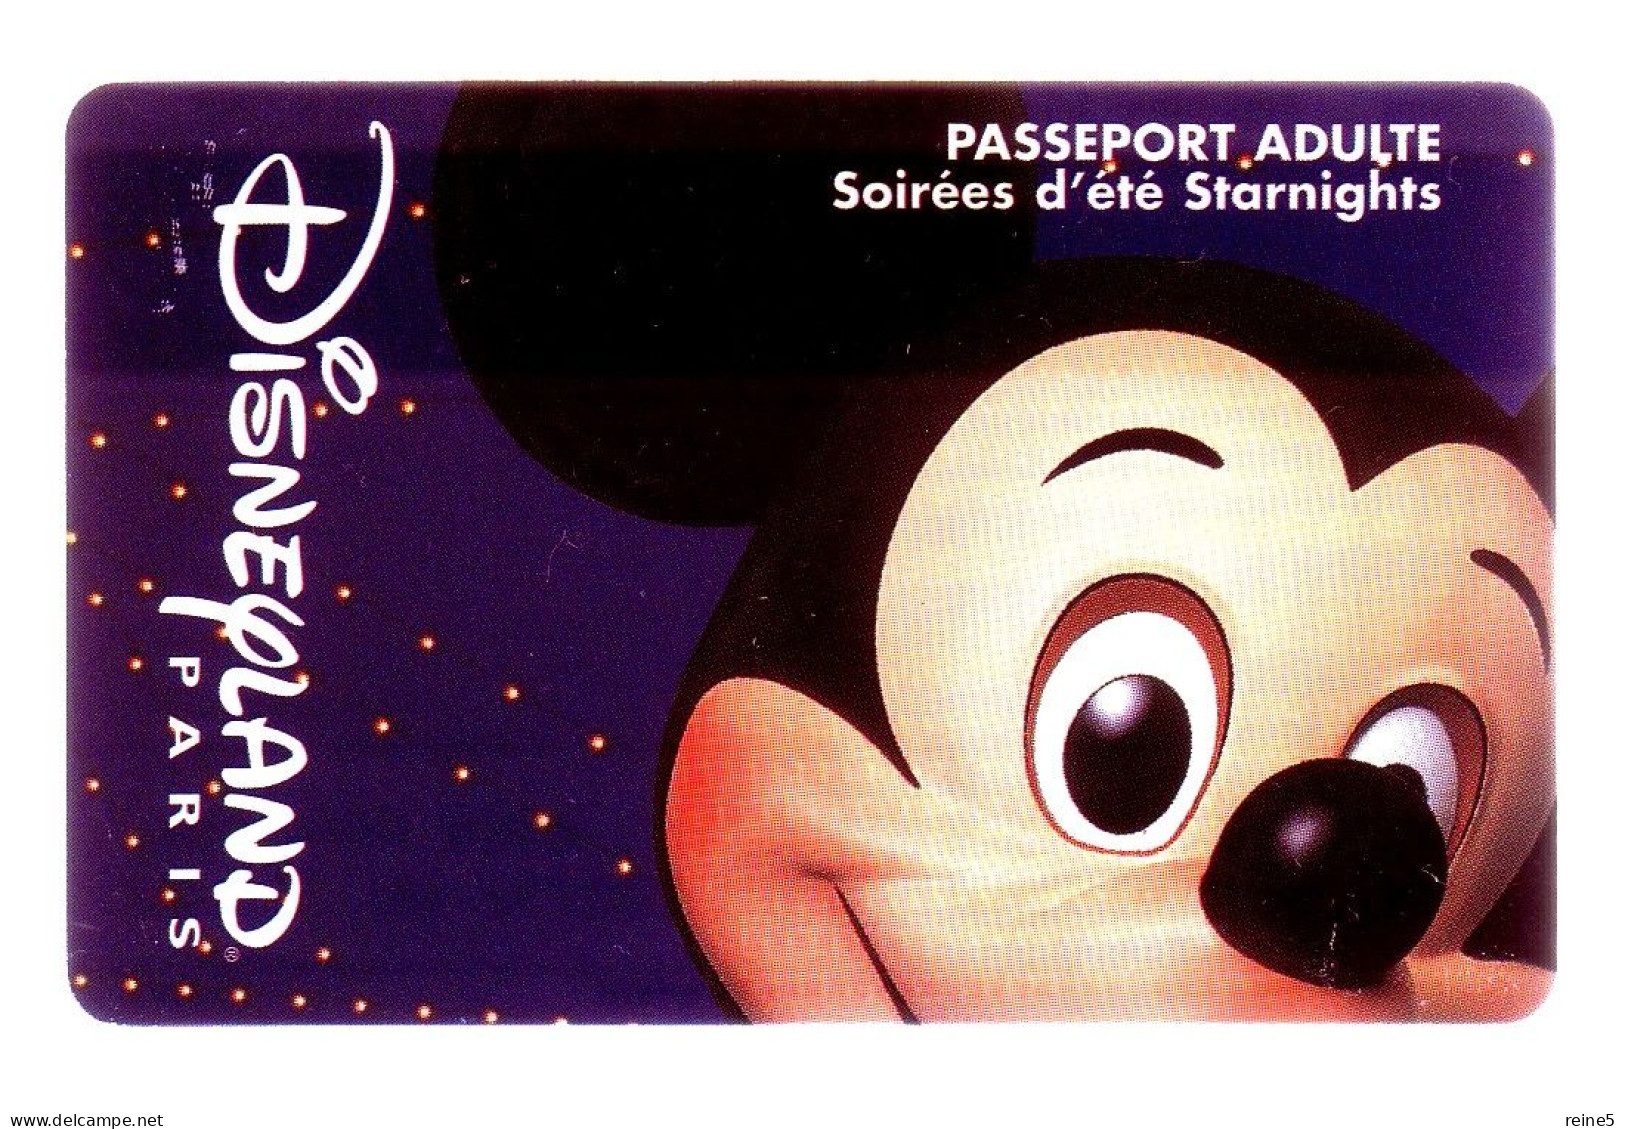 PASSEPORT ADULTE MICKEY SOIREES D'ETE STARNIGHTS DISNEYLAND PARIS -TRES BON ETAT -REF-PASS DISNEY-14 - Passaporti  Disney